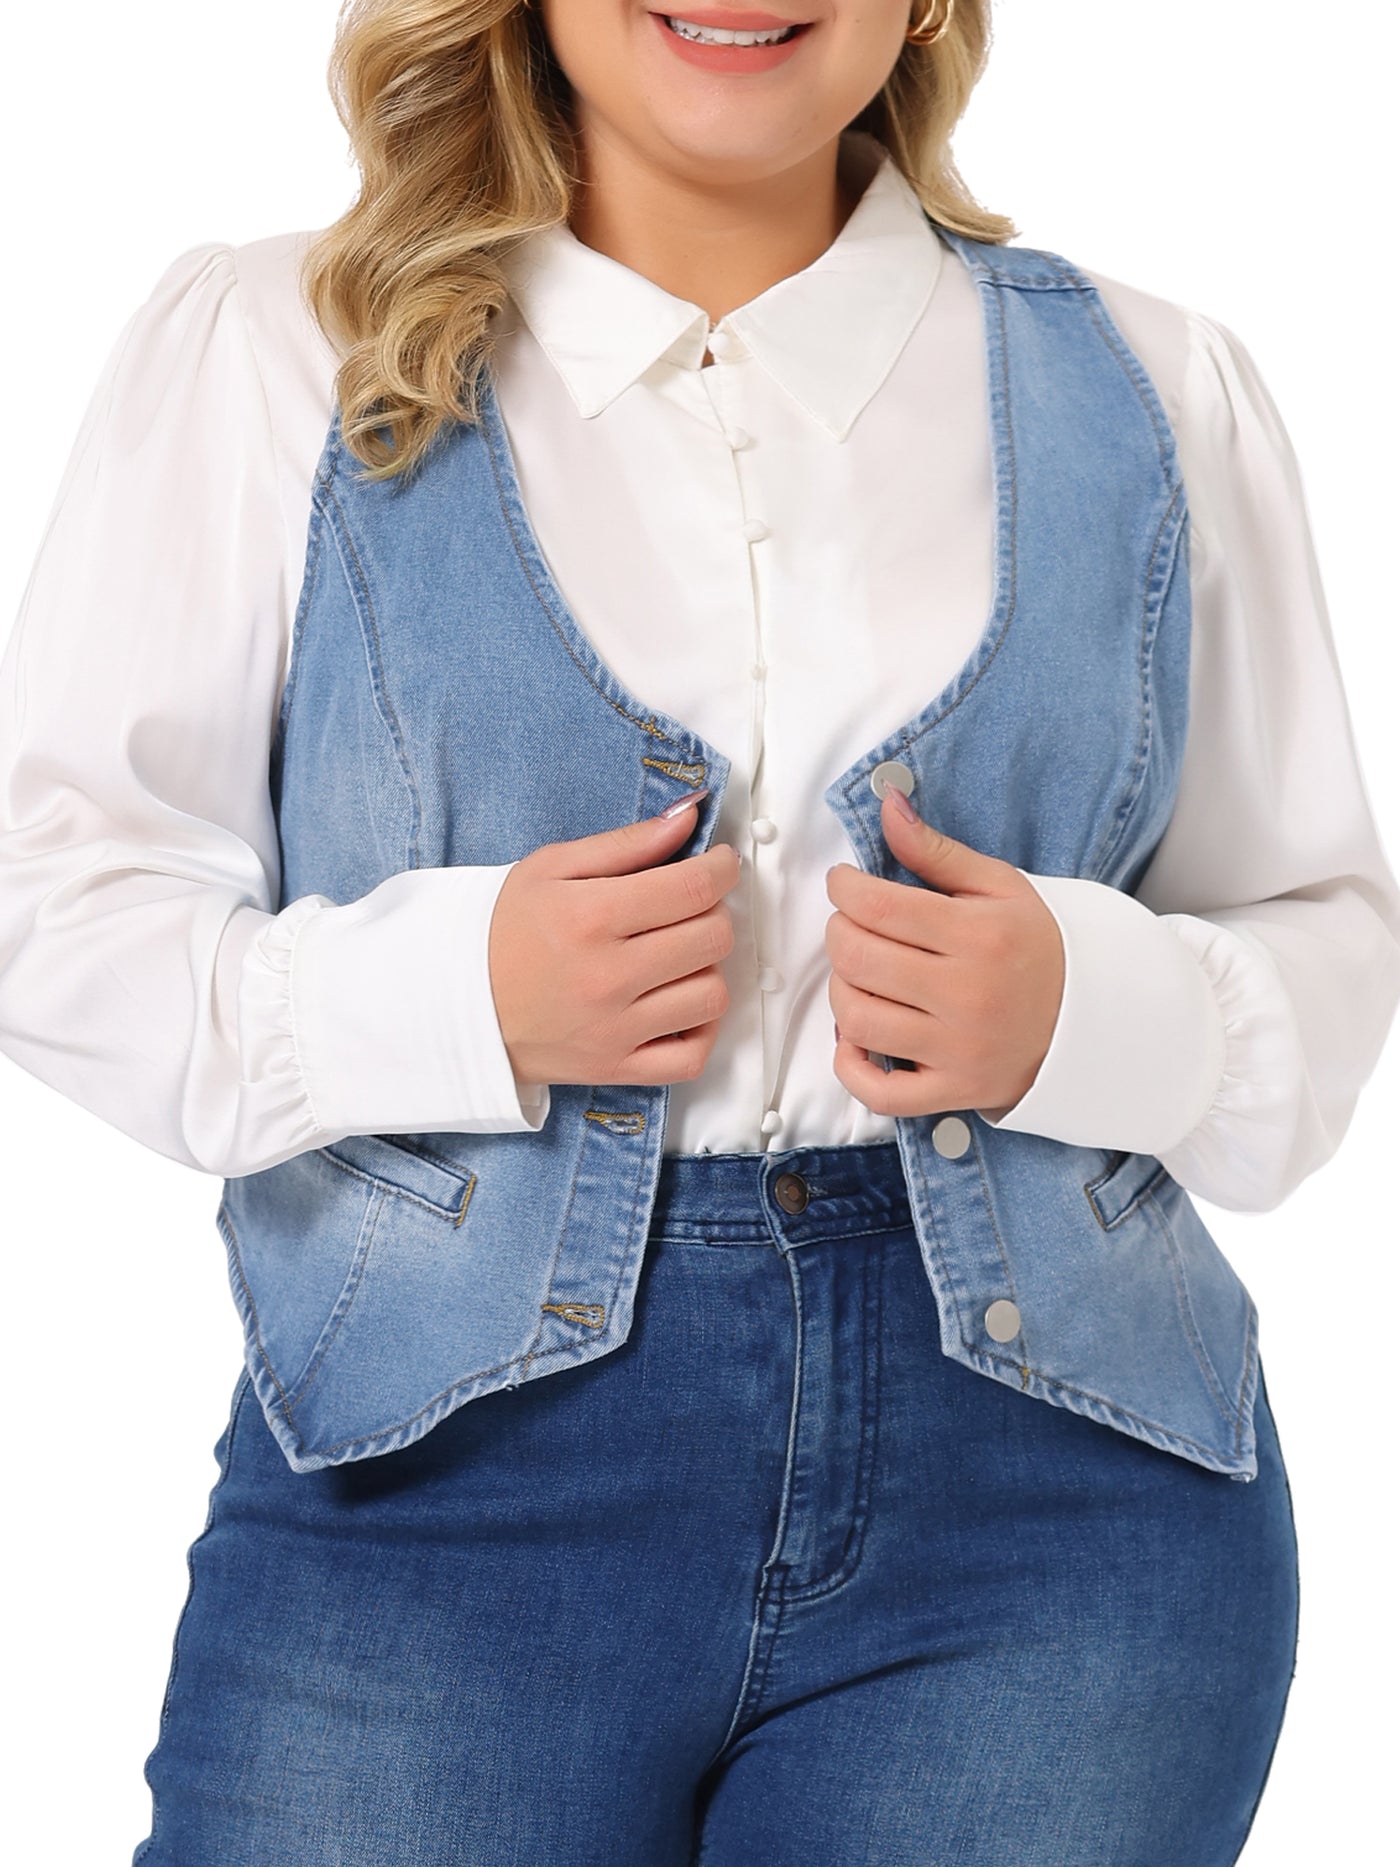 Bublédon Women's Plus Size Denim Sleeveless Jacket Button Up Vintage Jean Waistcoat Vests